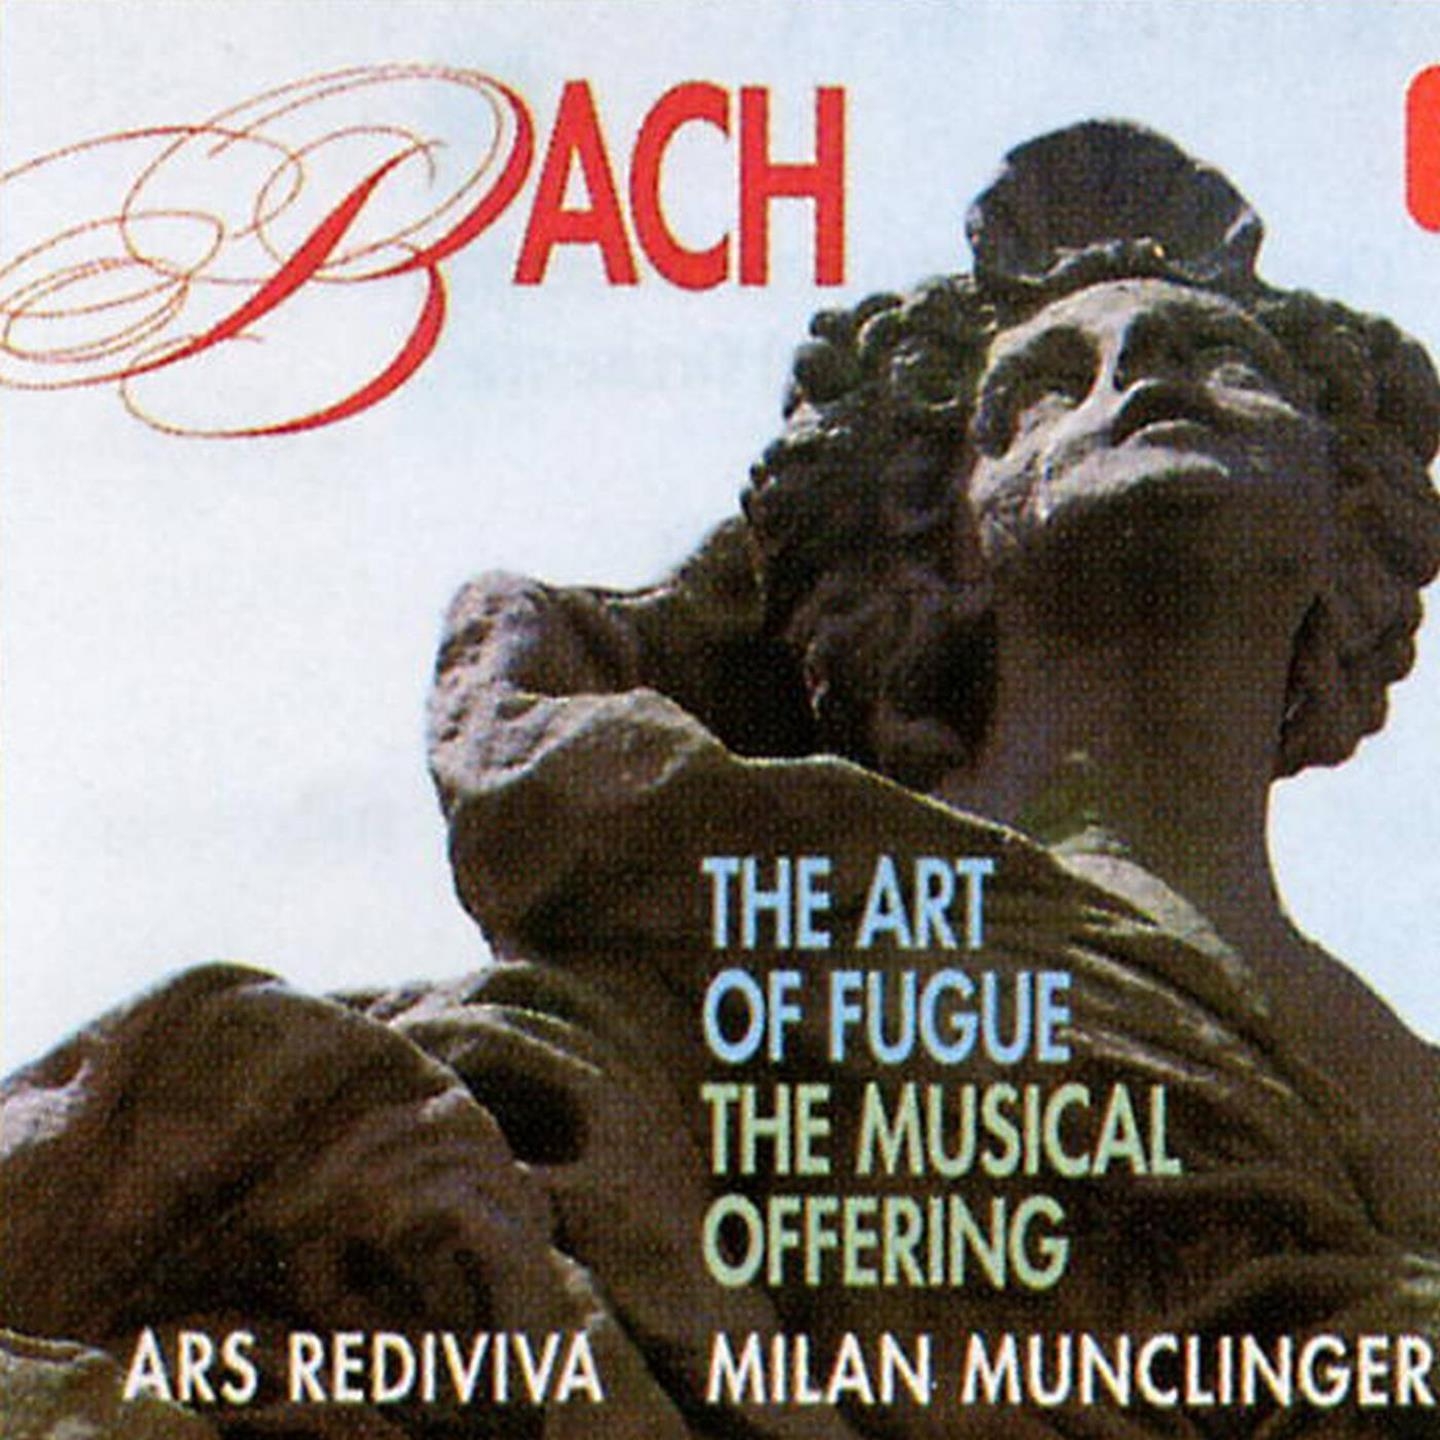 The Musical Offering, Op. 6, BWV 1079, Sonata sopr' il soggetto Reale: IV. Allegro